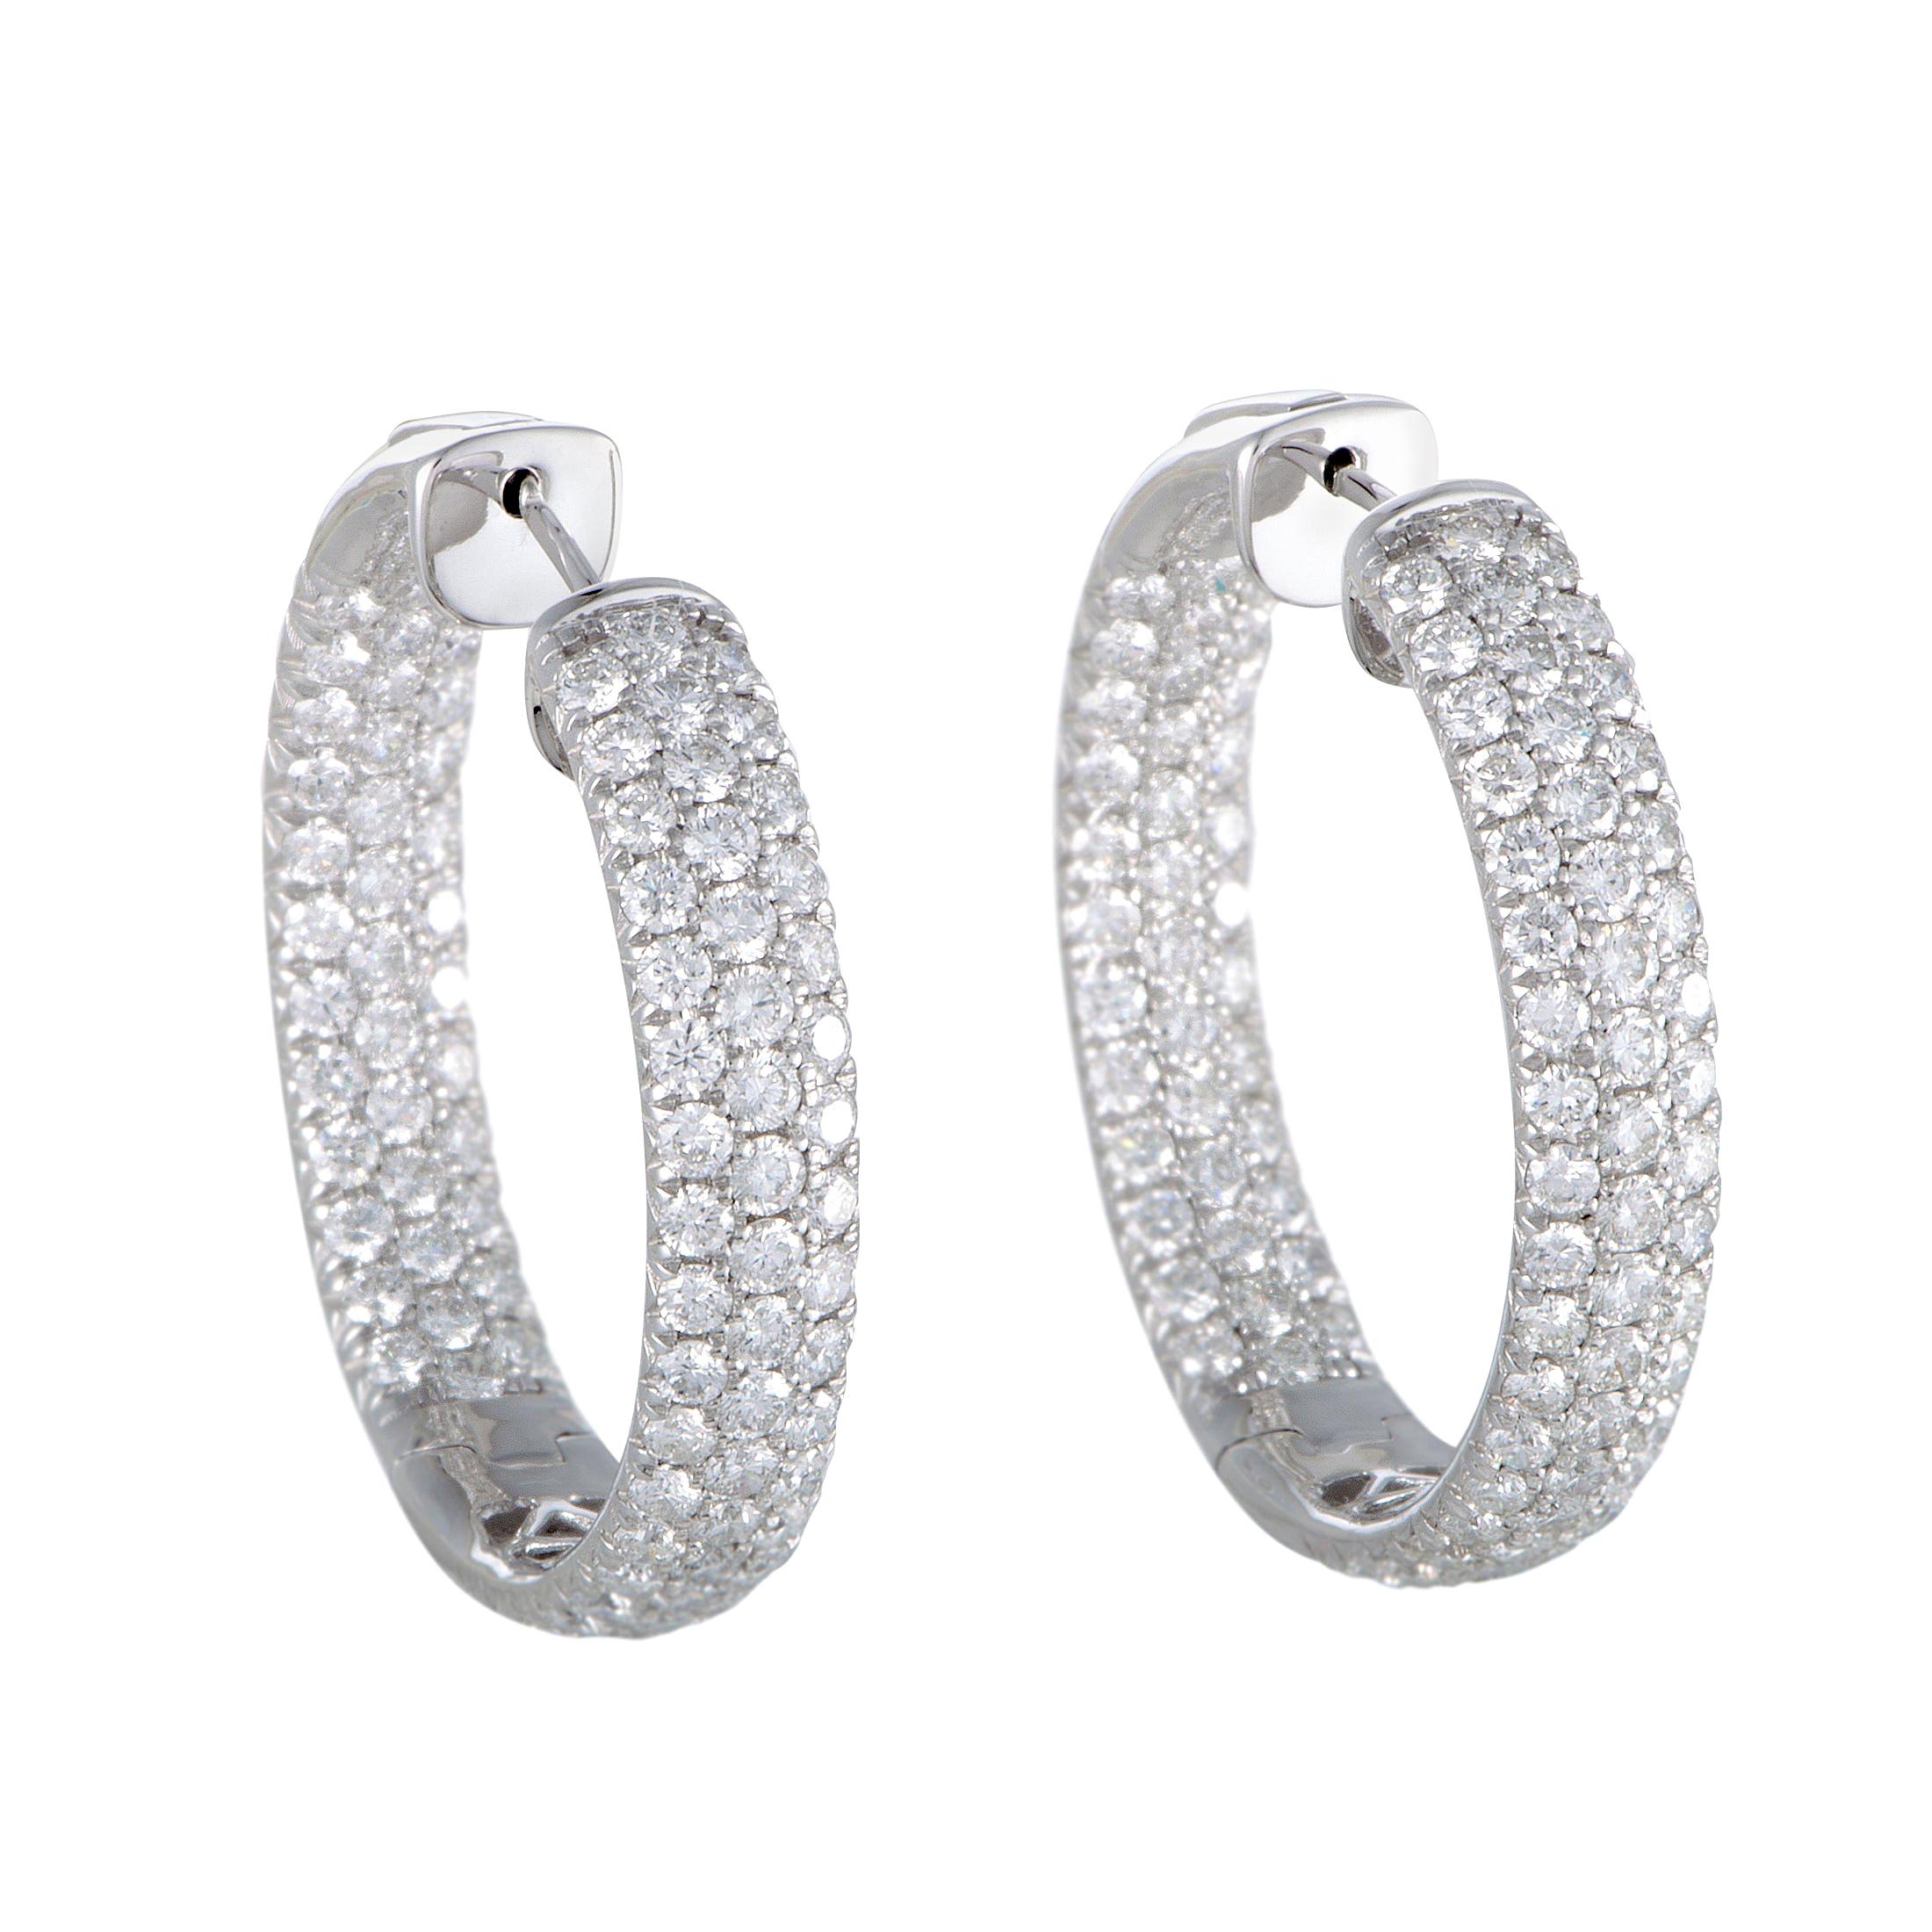 LB Exclusive 18 Karat Gold Inside Out, 5.25 Carat Diamond Pave Hoop Earrings